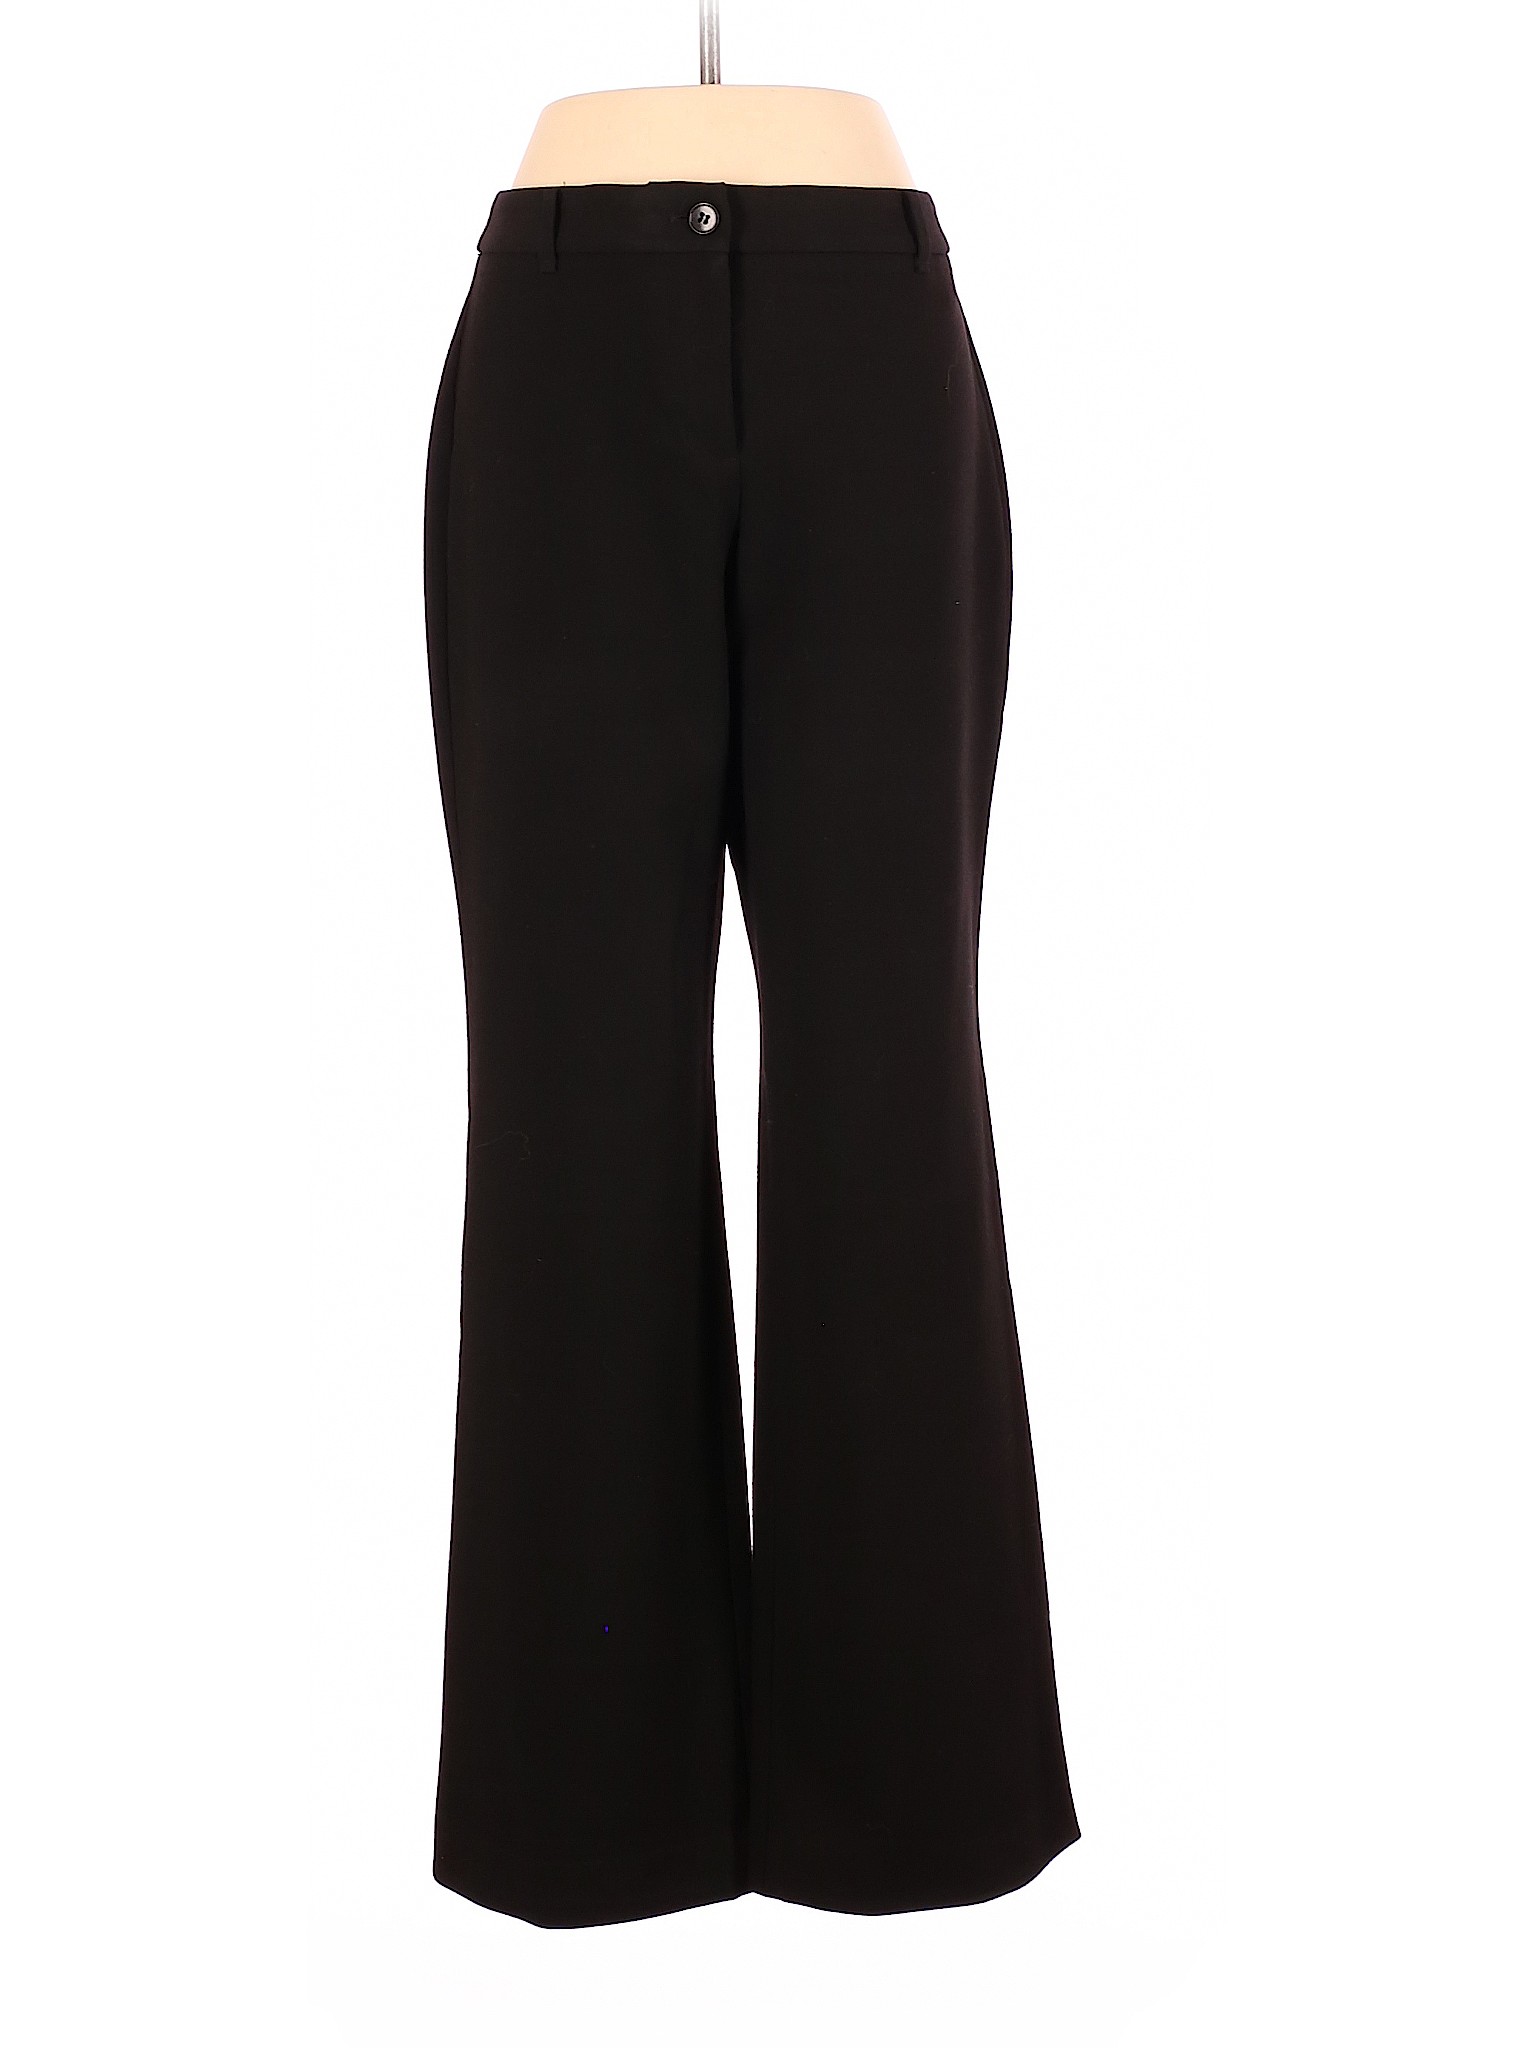 Talbots Women Black Dress Pants 6 Petites | eBay